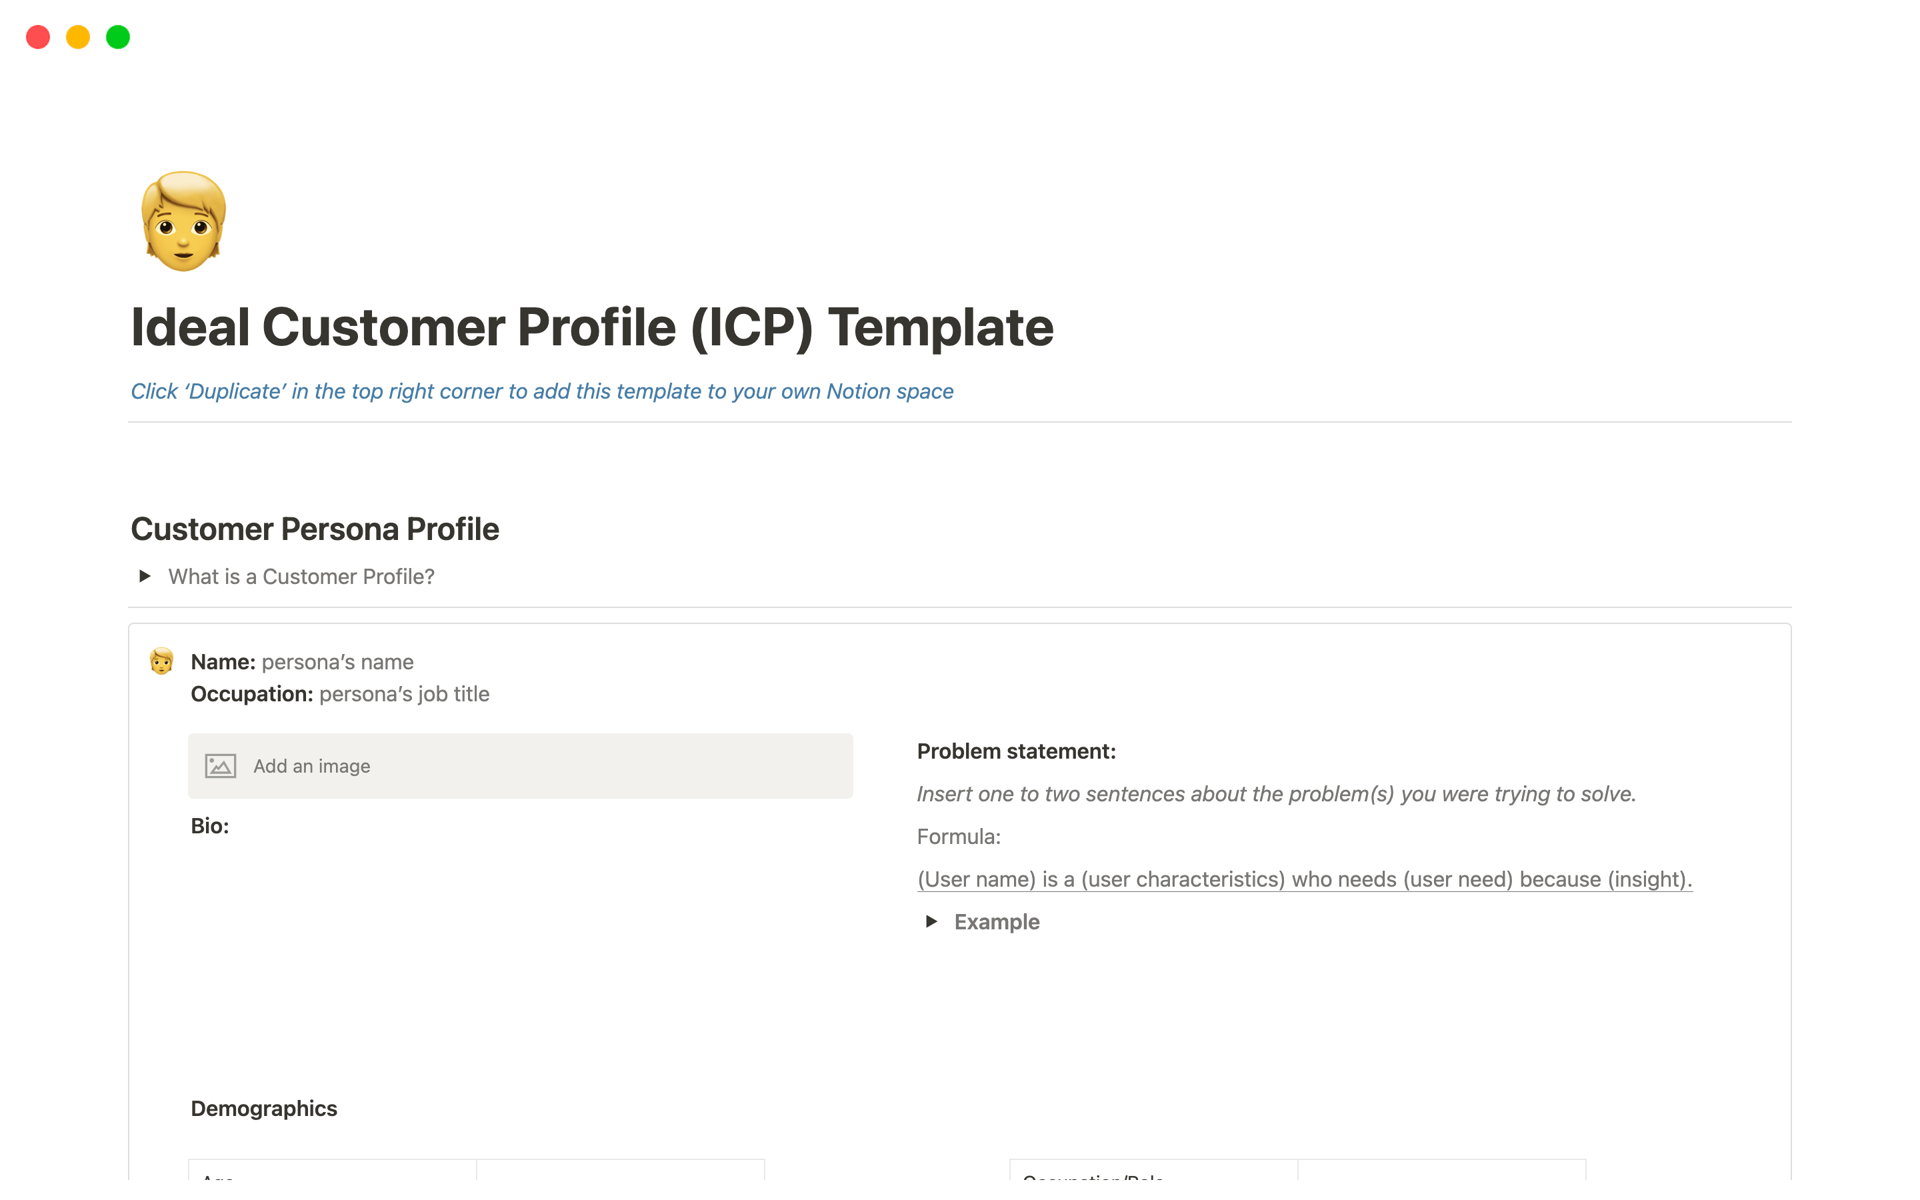 Vista previa de plantilla para Ideal Customer Profile (ICP)